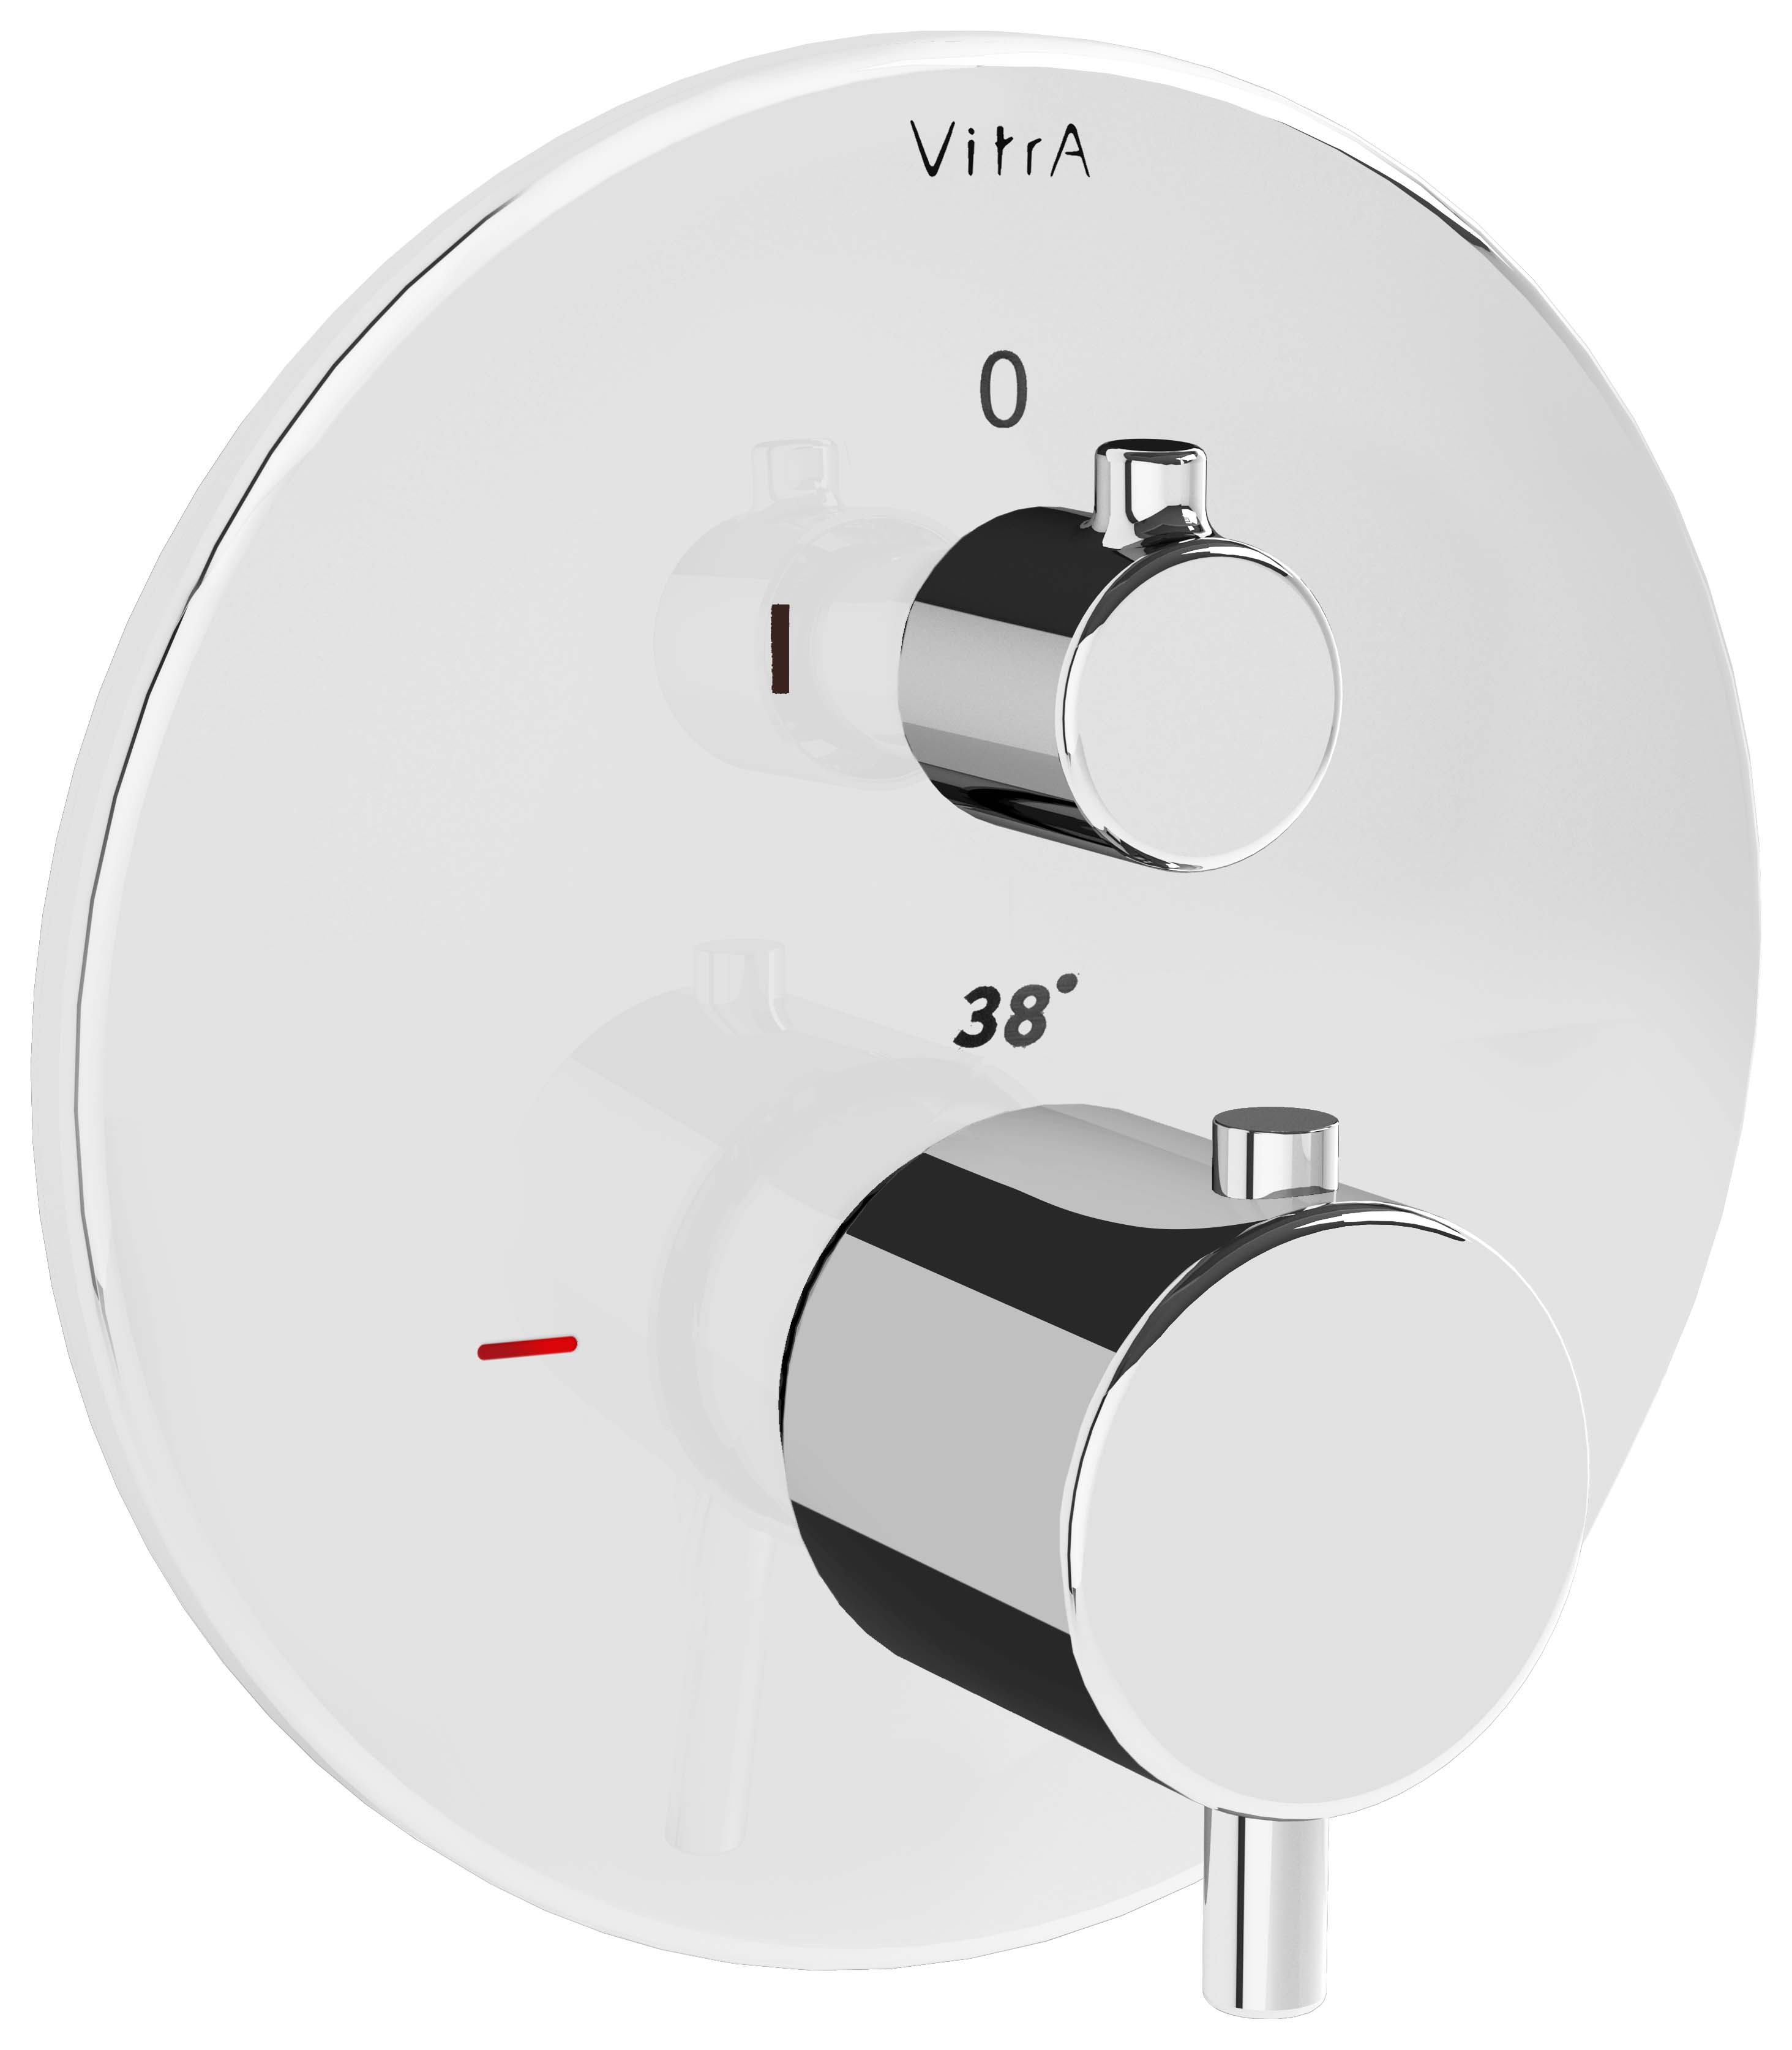 VitrA Origin Round Built-In 1 Way Thermostatic Bath & Shower Mixer Valve - Chrome